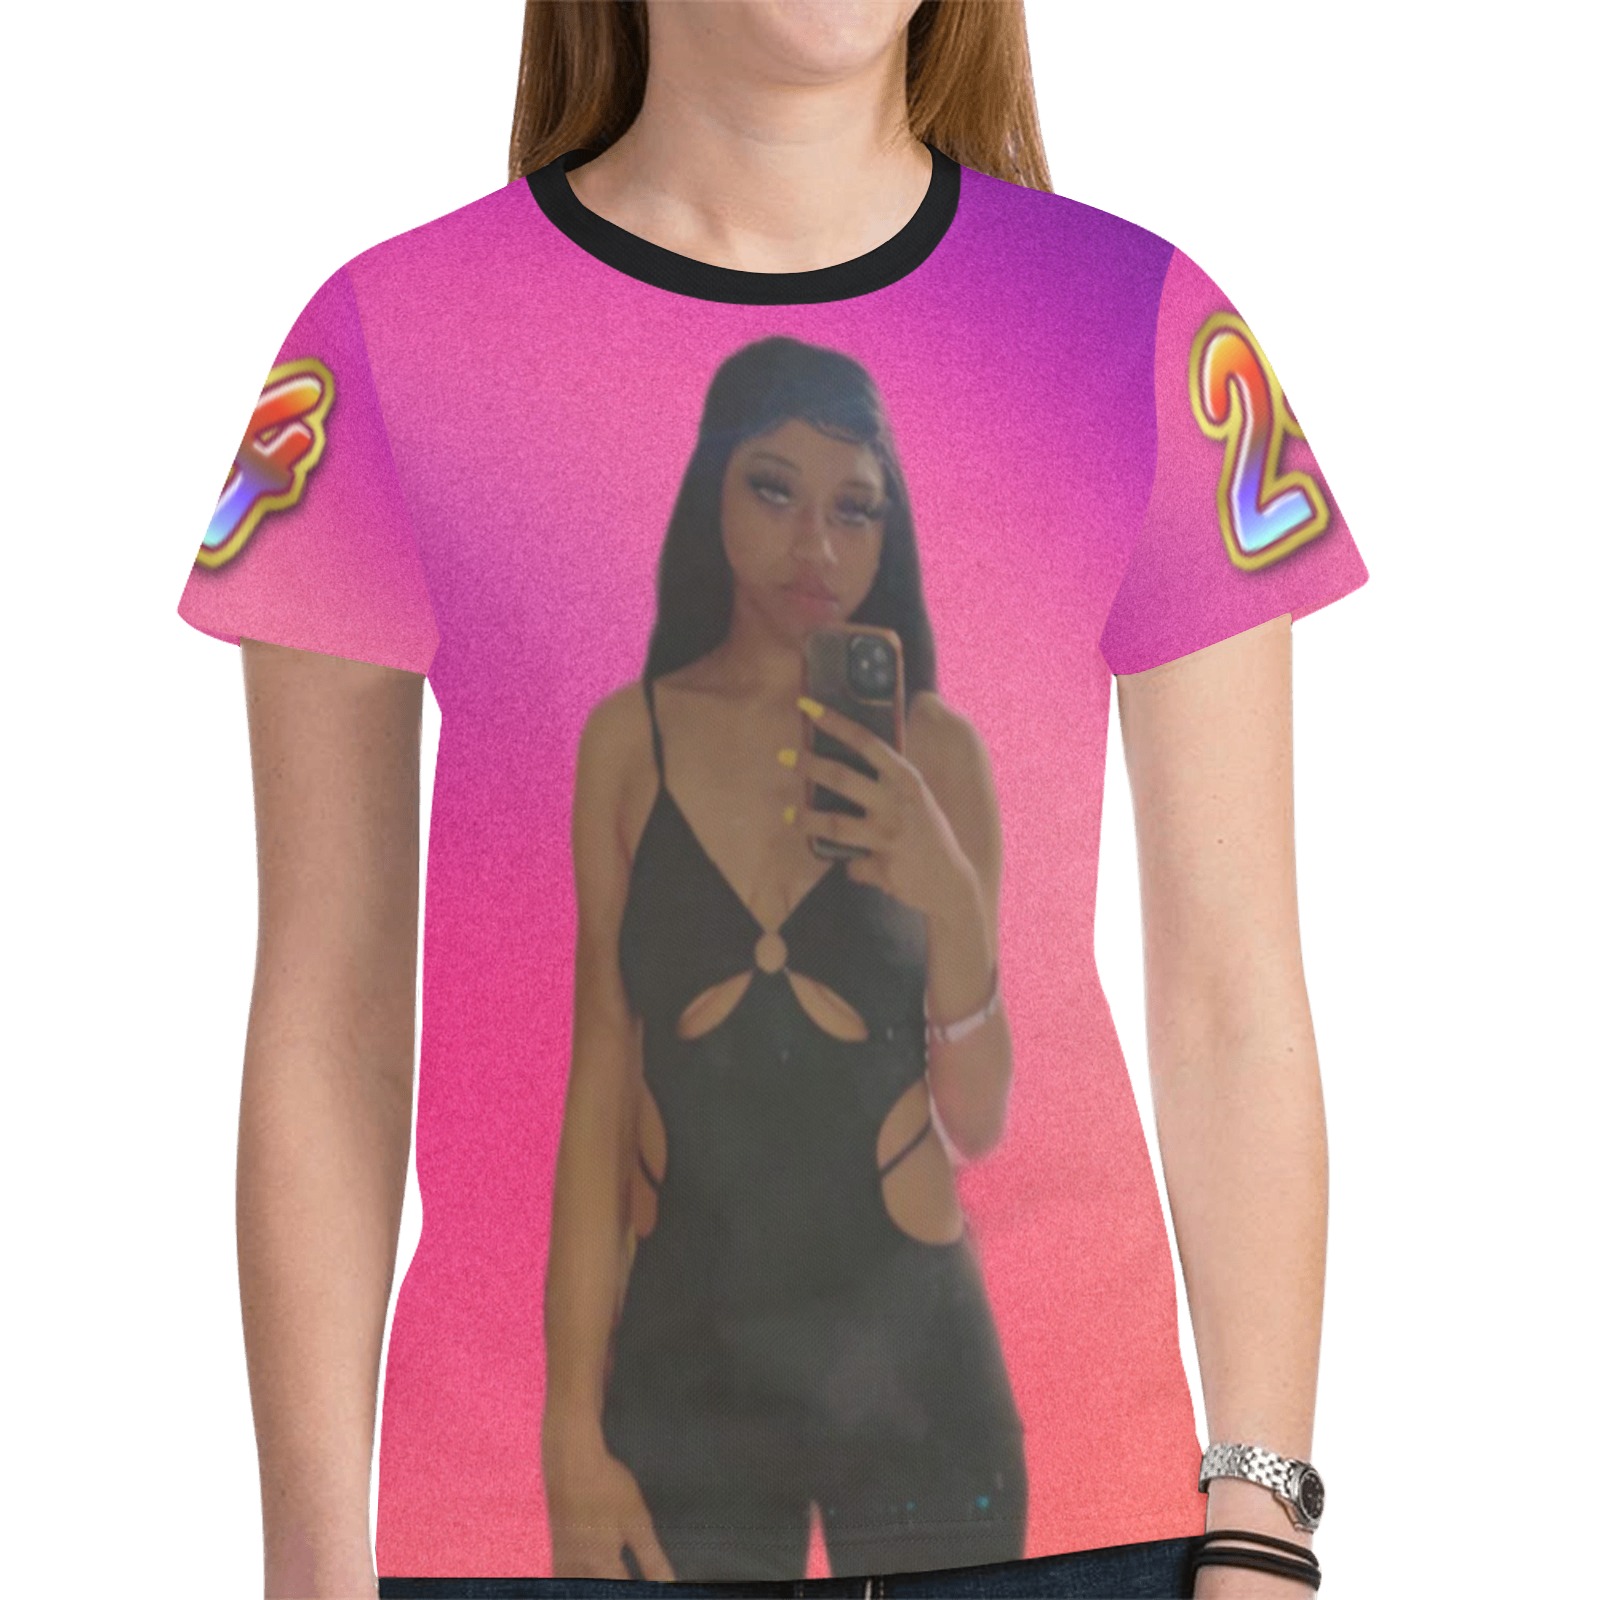 24 Shae Neon New All Over Print T-shirt for Women (Model T45)